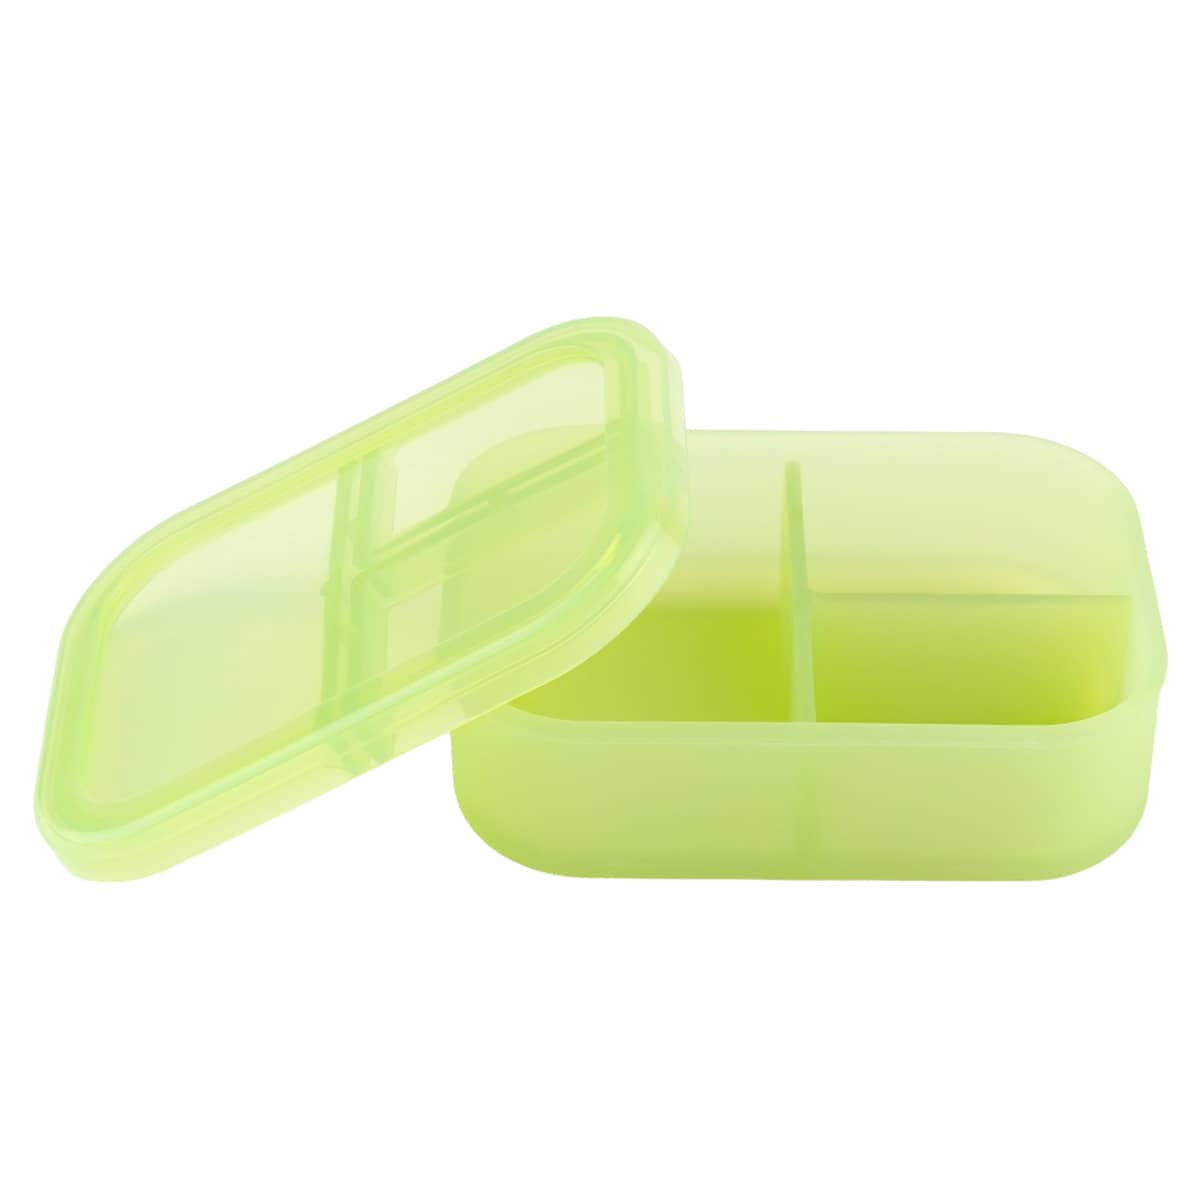 Bumkins Three Section Bento Box - Jelly Silicone - Green